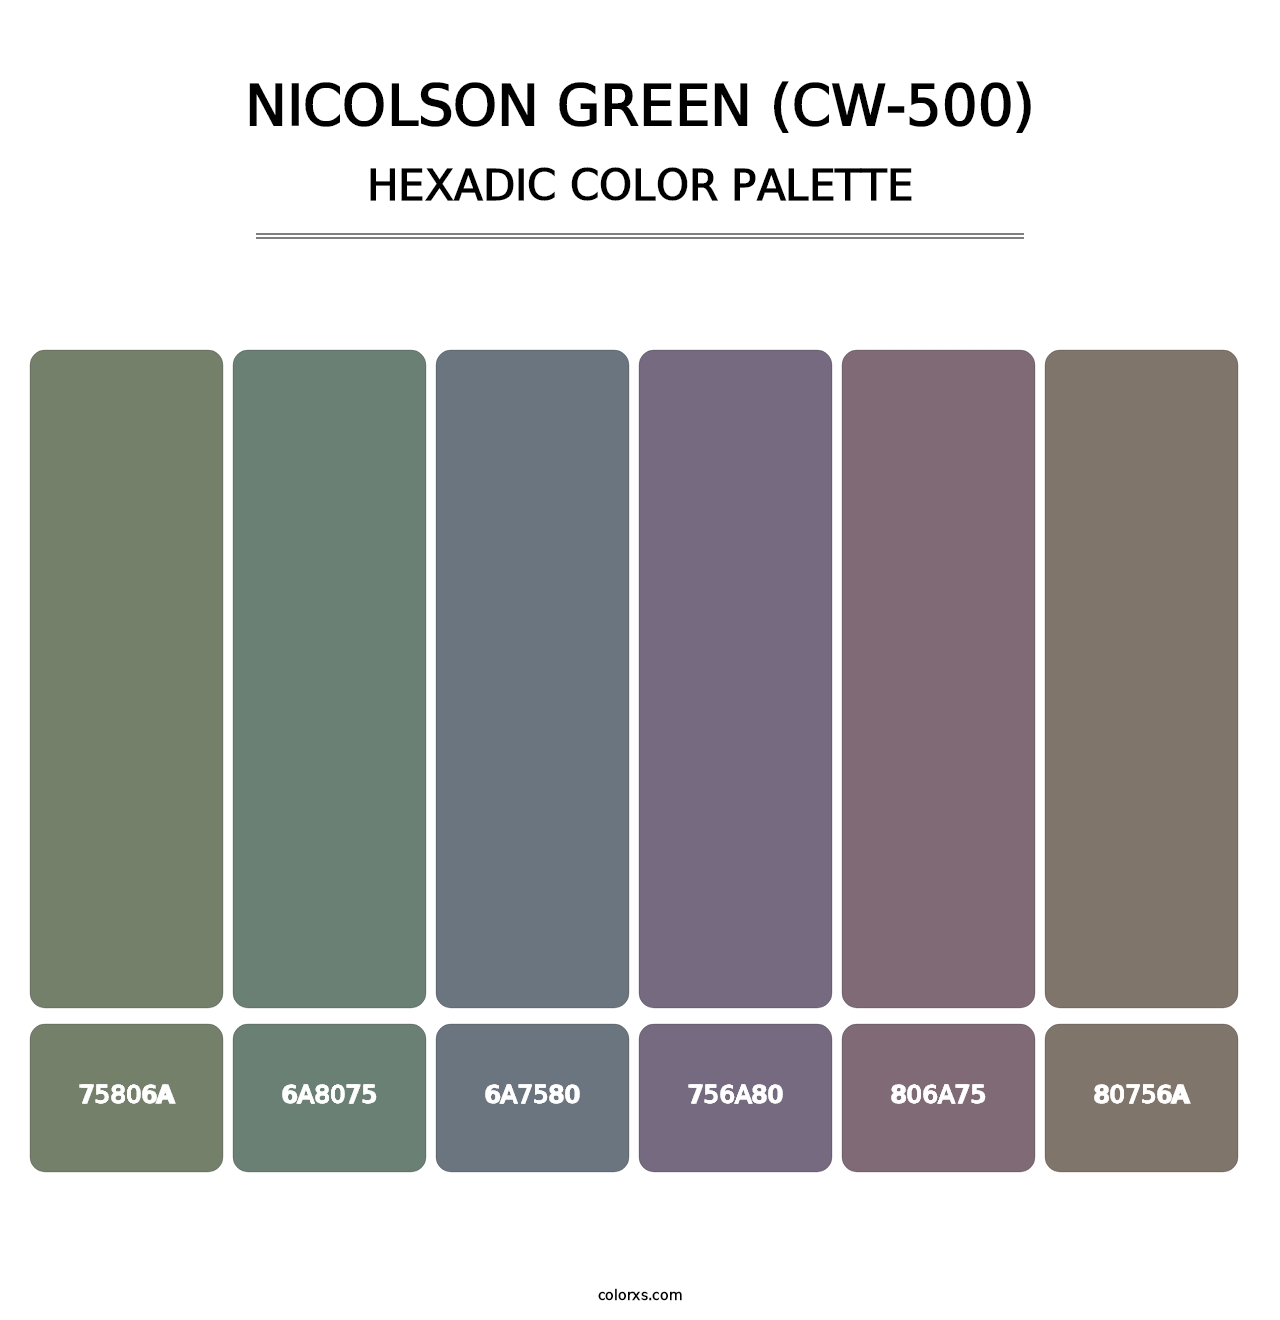 Nicolson Green (CW-500) - Hexadic Color Palette